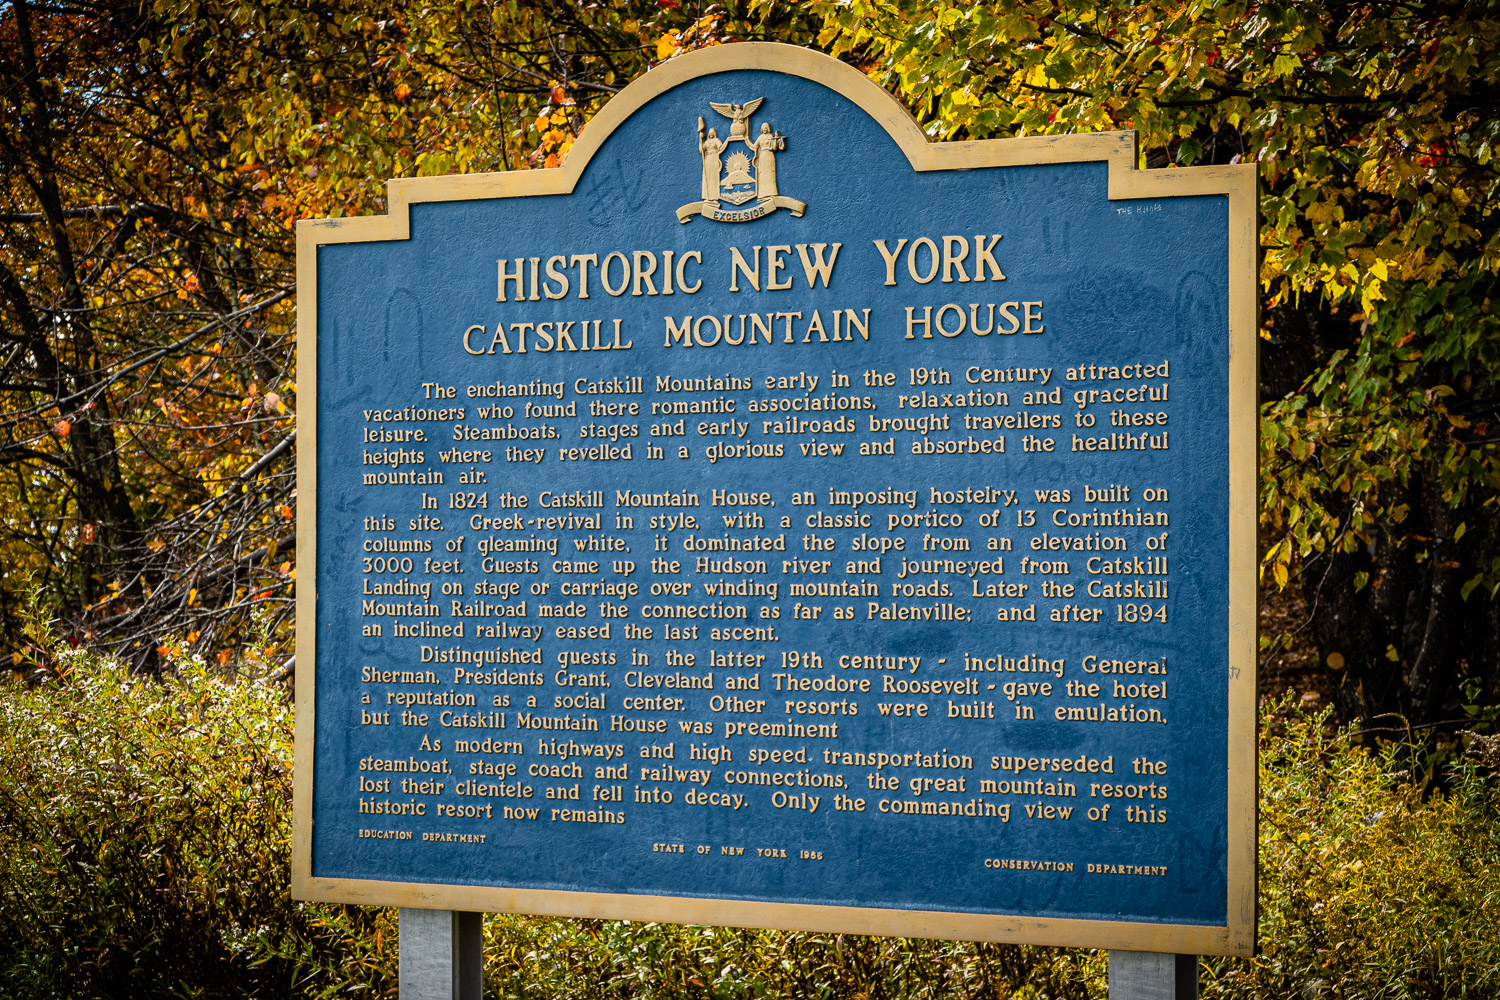 Catskill Mountain House